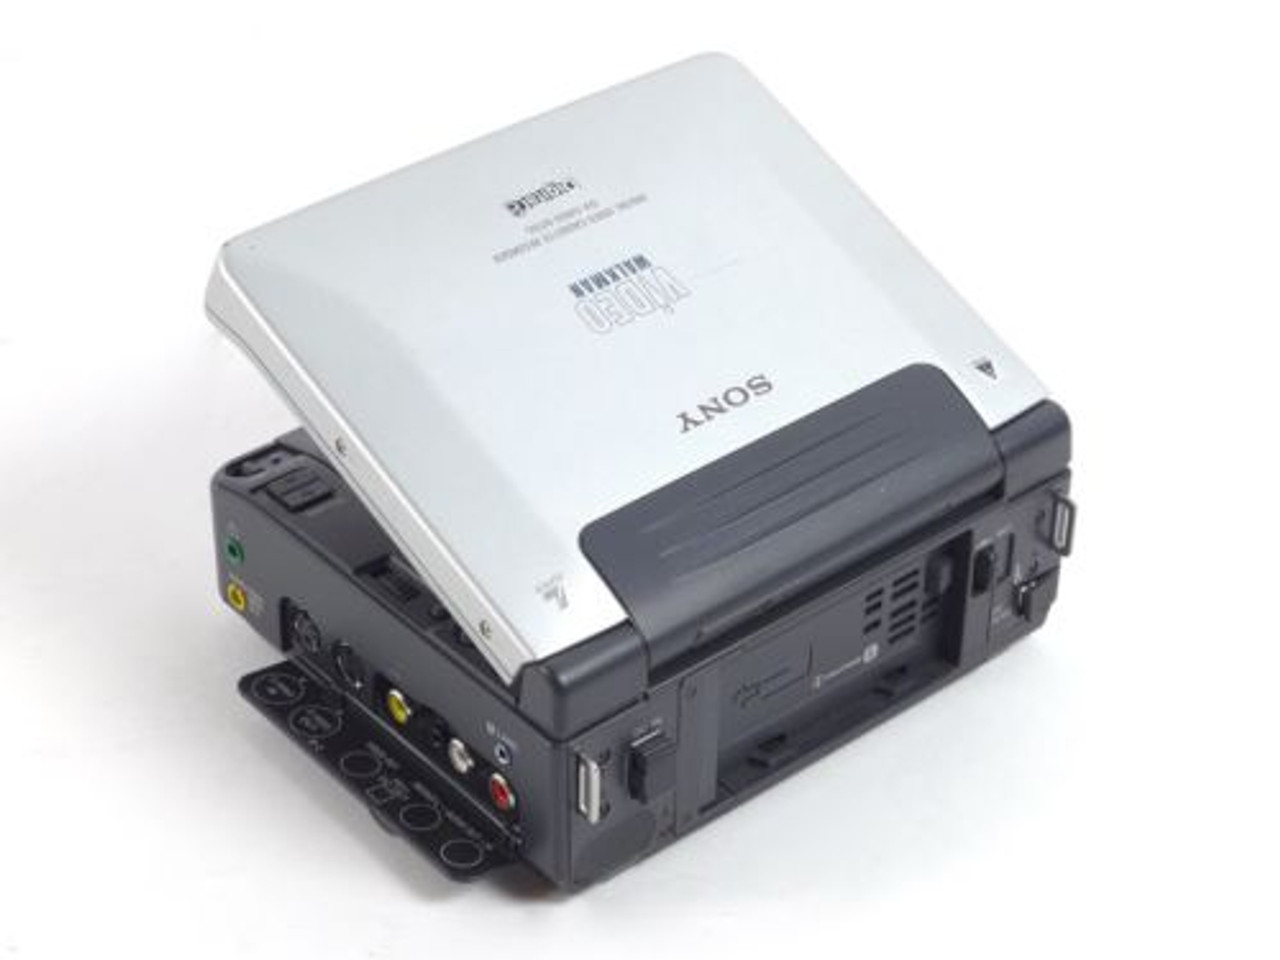 Sony Video Walkman VCR - Digital8 - Sony GV-D800 – Southern Advantage  Company